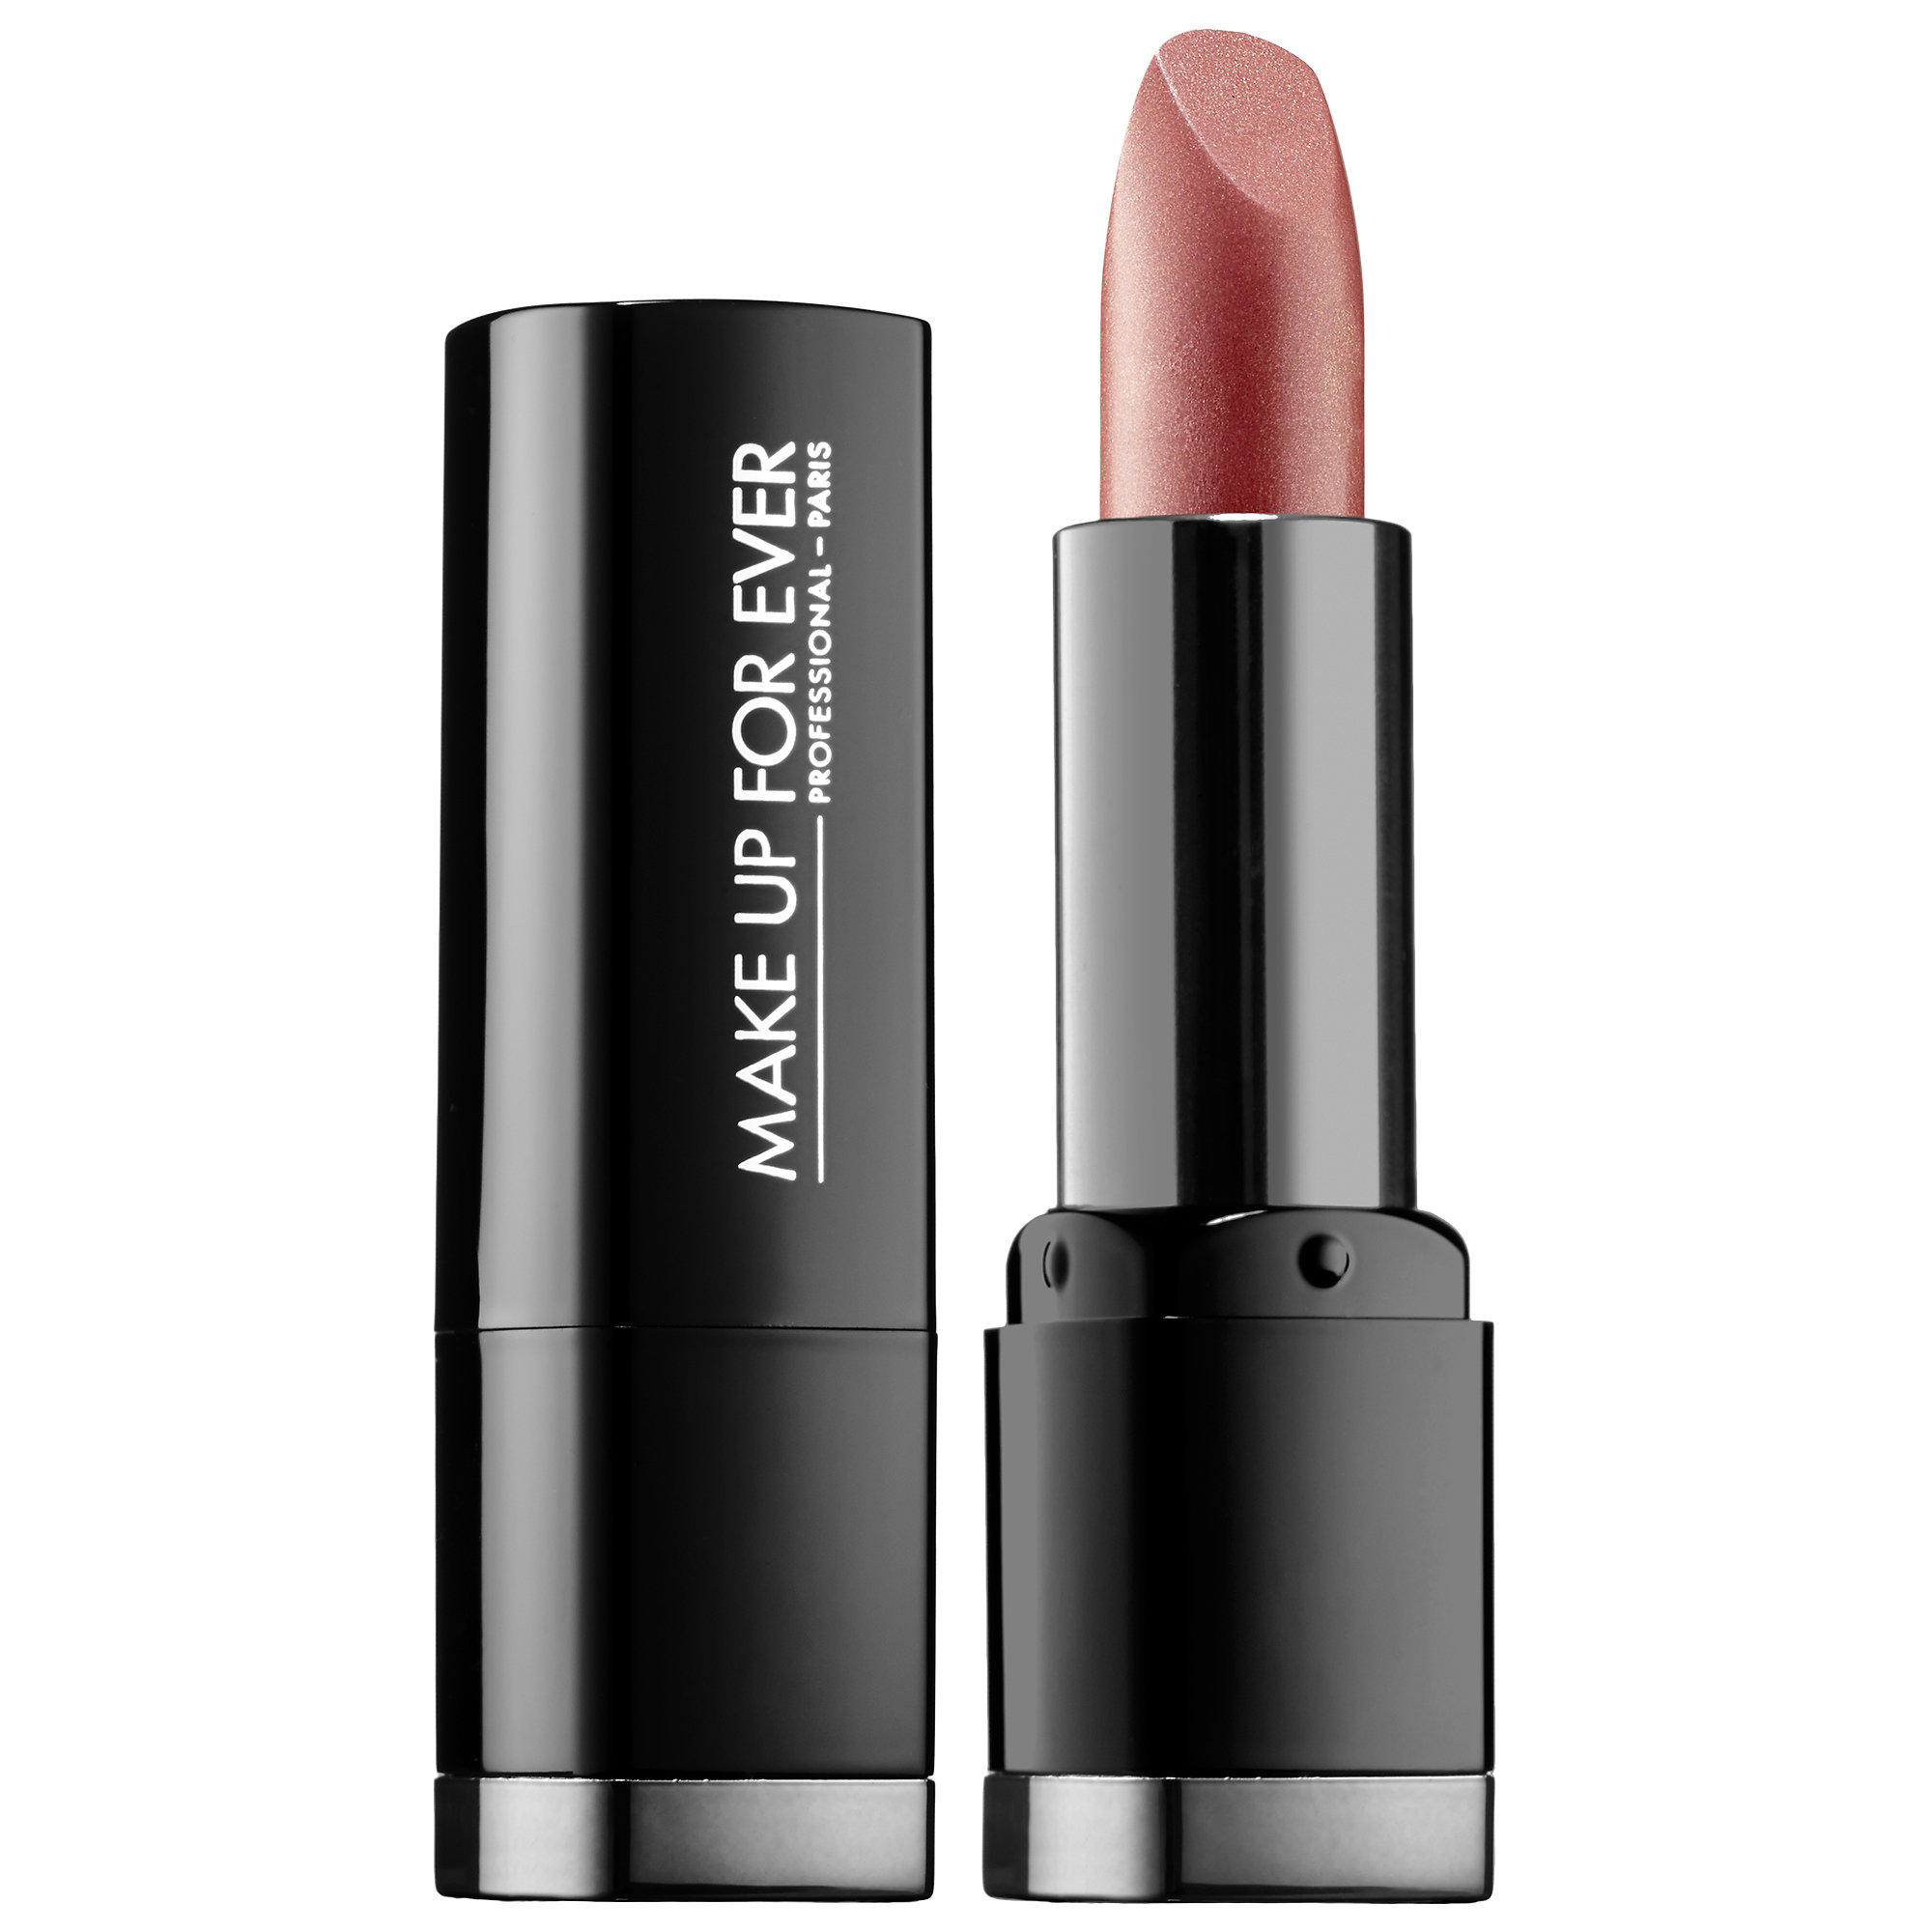 Makeup Forever Rouge Artist Intense Lipstick 54